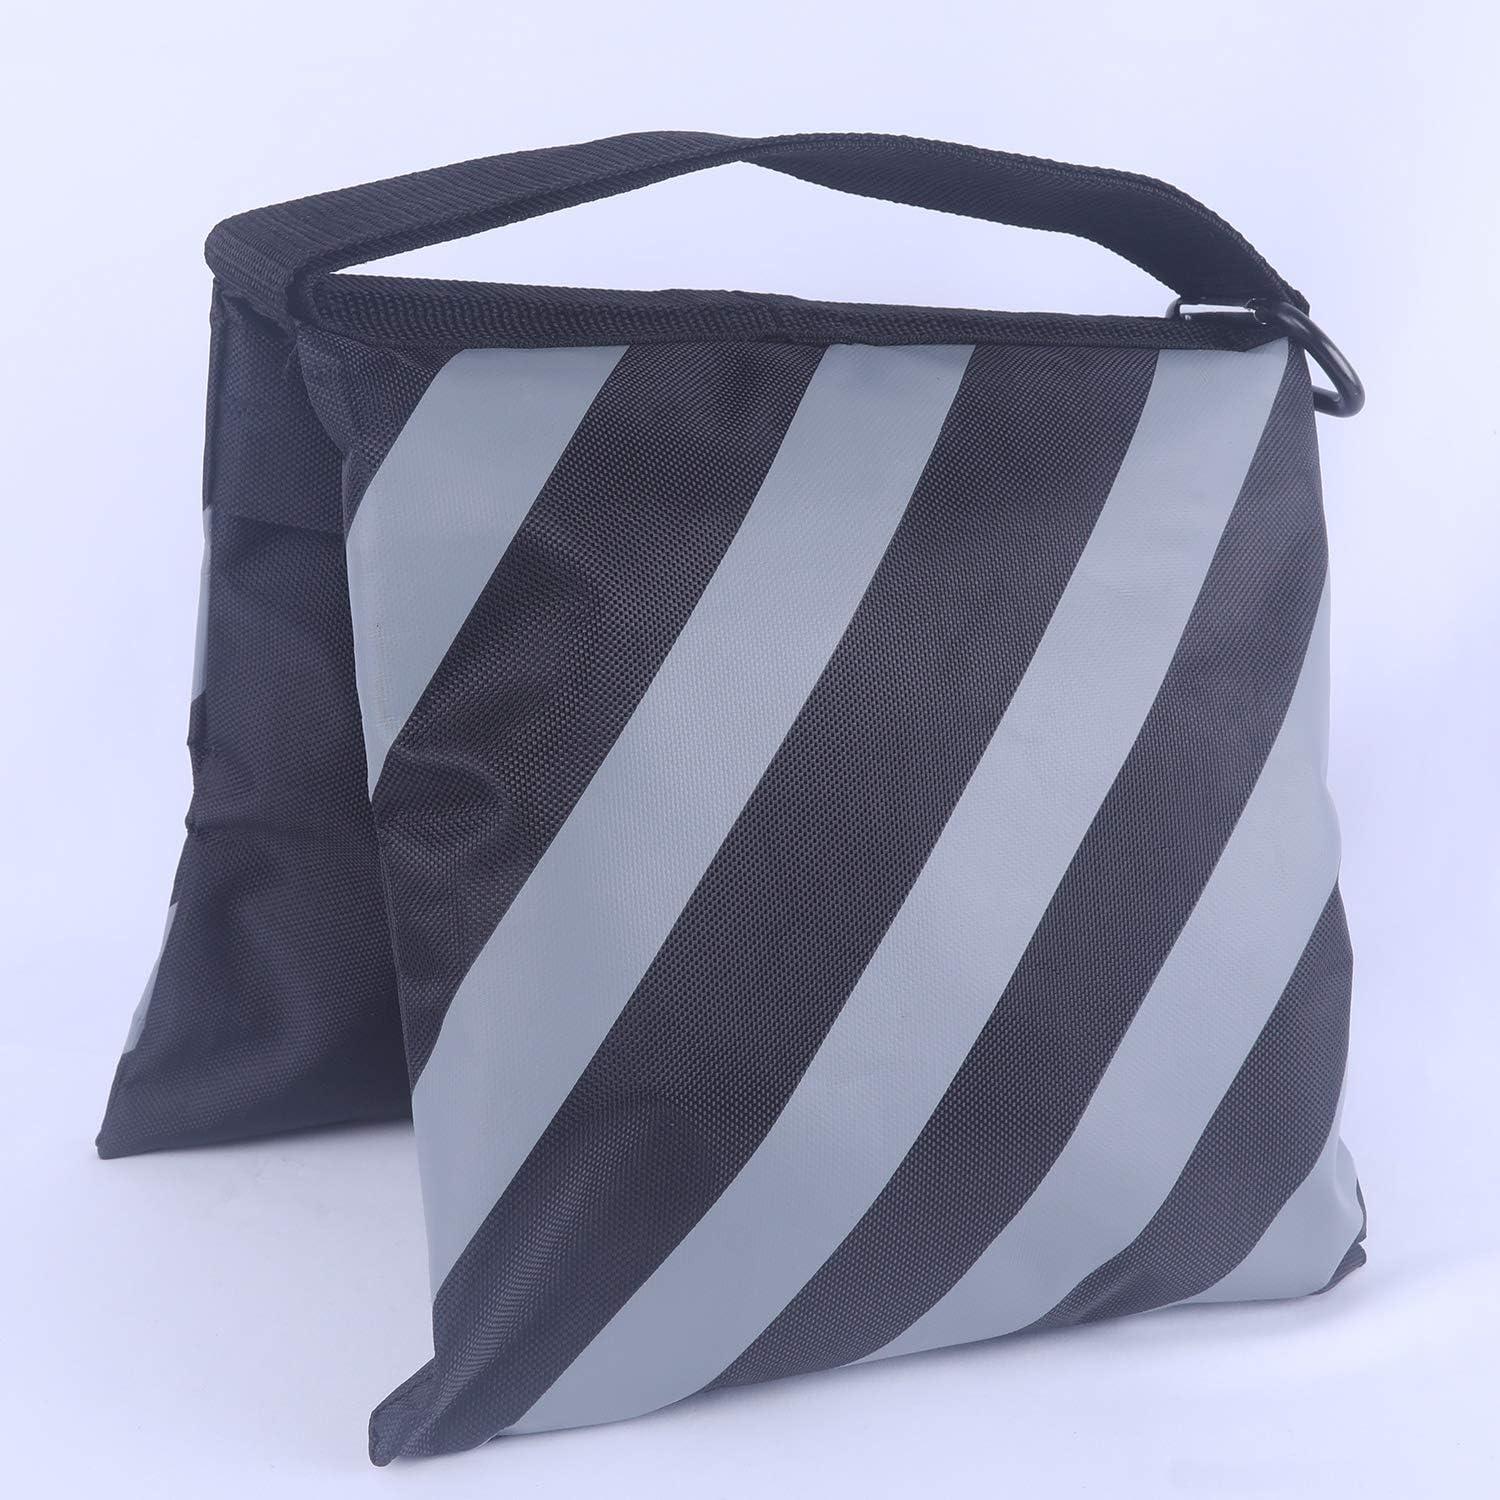 ABCCANOPY Super Heavy Duty Sandbag Saddlebag Design 4 Weight Bags for Photo Video Studio Stand (Black)